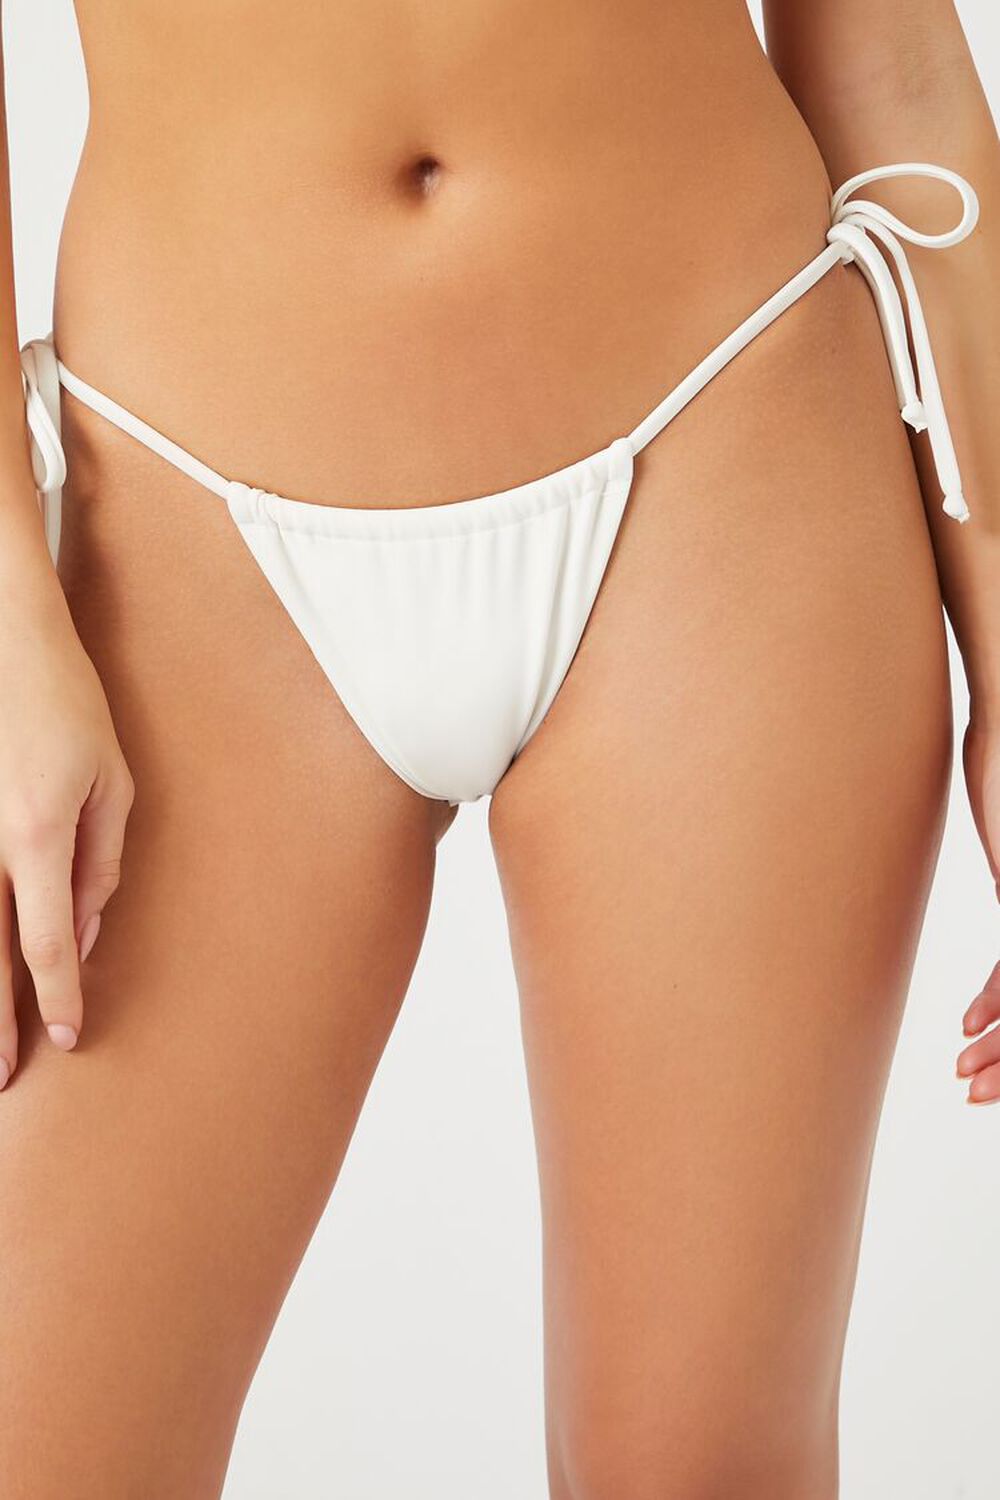 Forever 21 Women's Cheeky Low-Rise Bikini Bottoms in Vanilla, XL